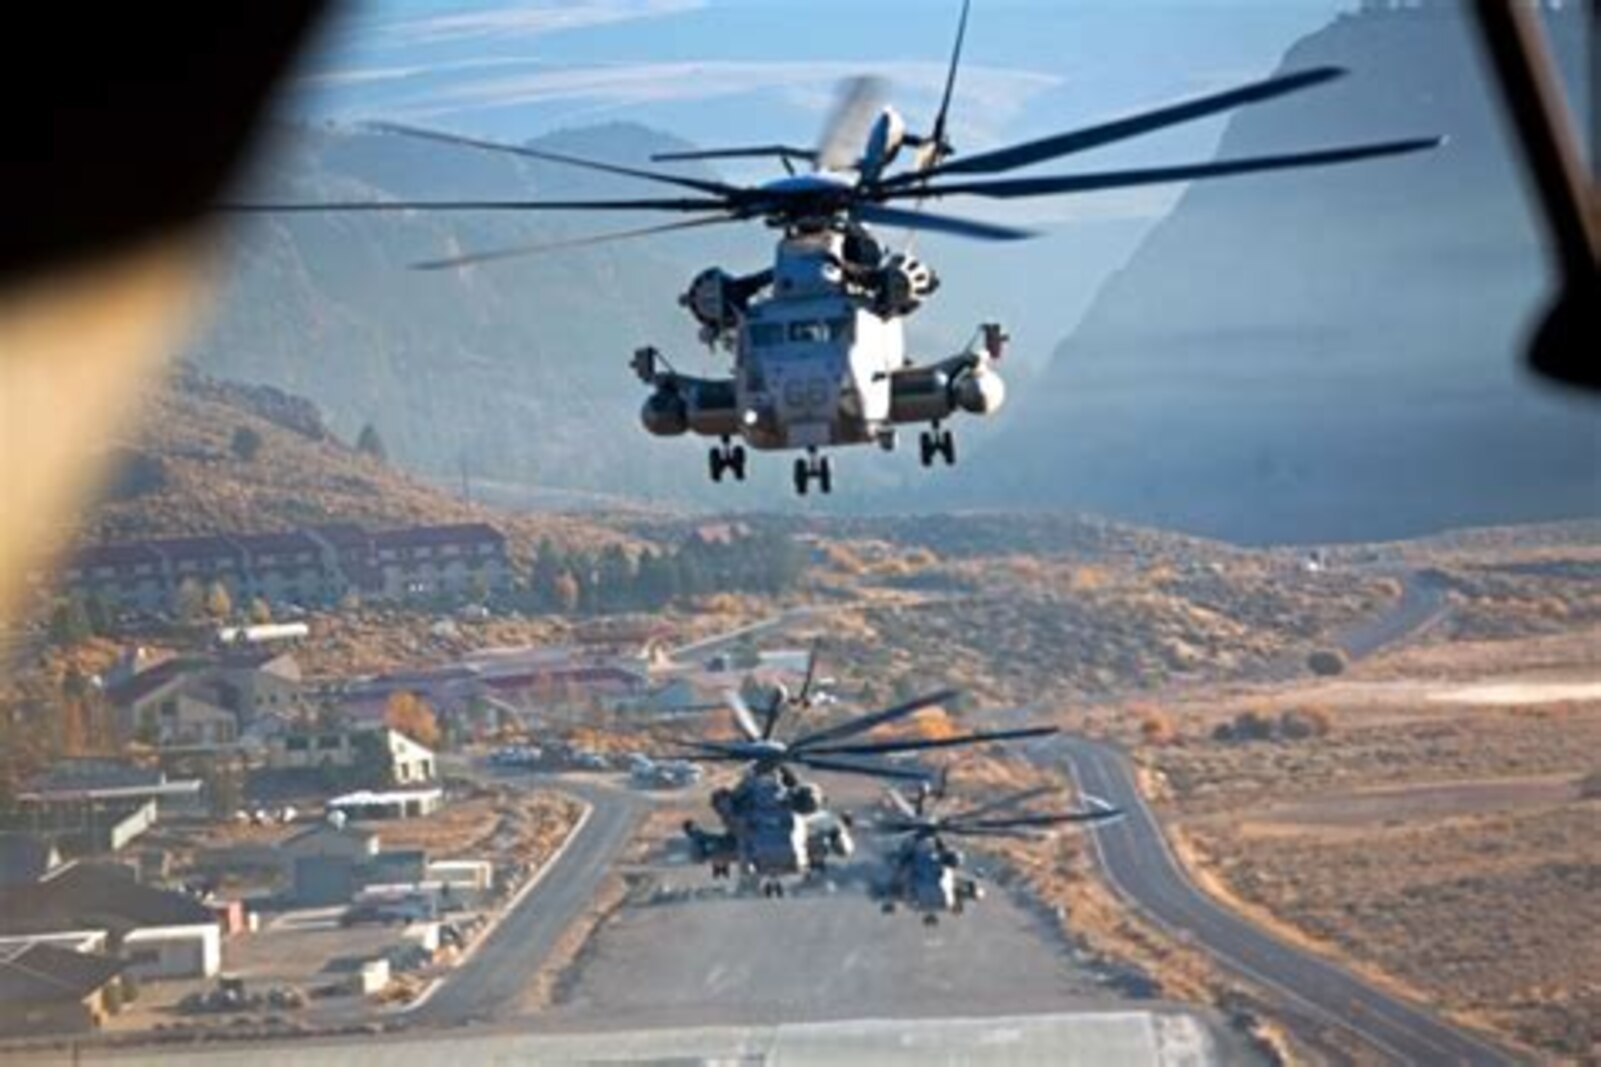 CH-53E squadron conducting flight ops at MCMWTC.